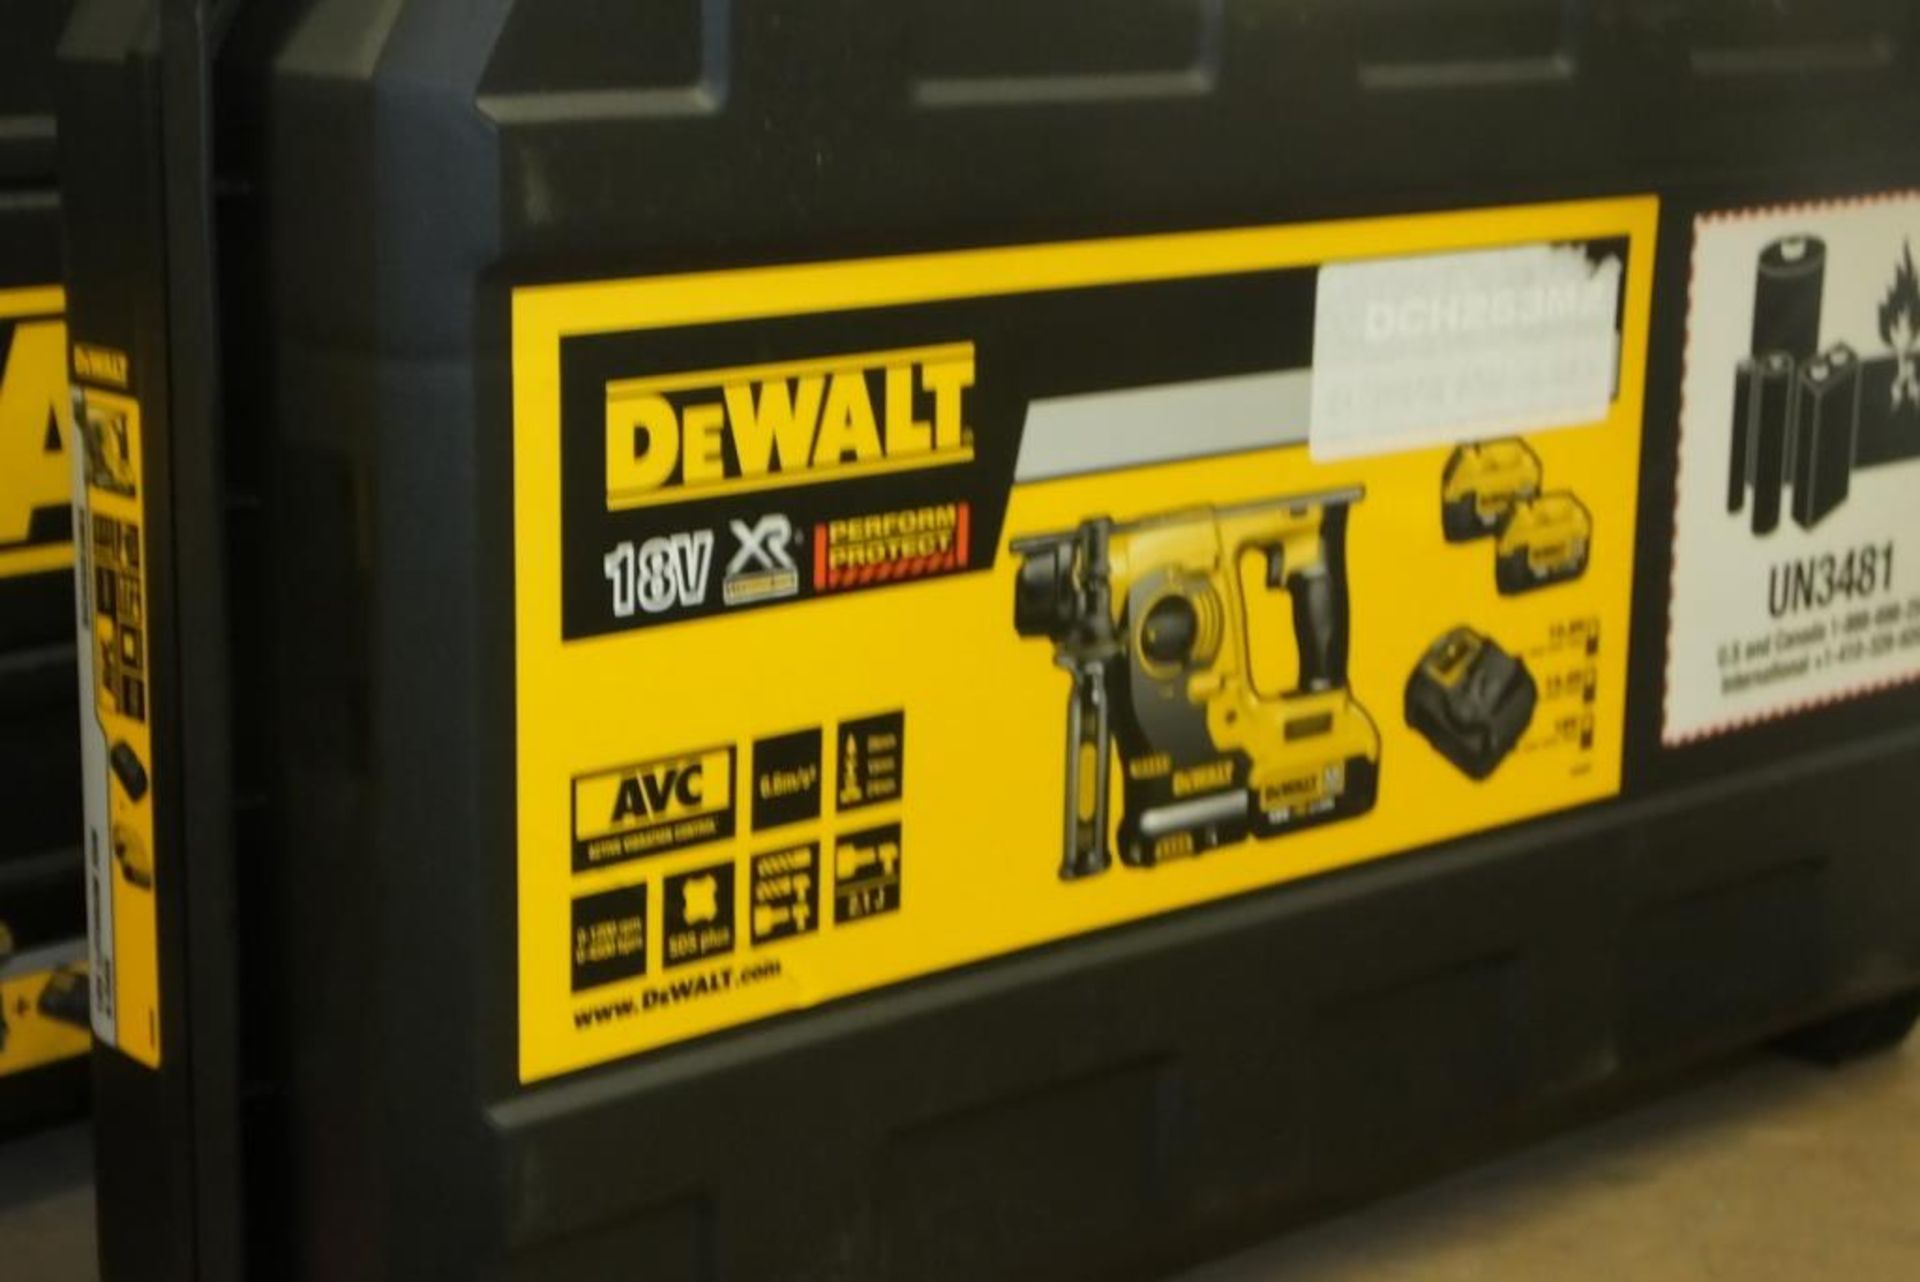 3x Dewalt power tool cases - empty - Image 2 of 4